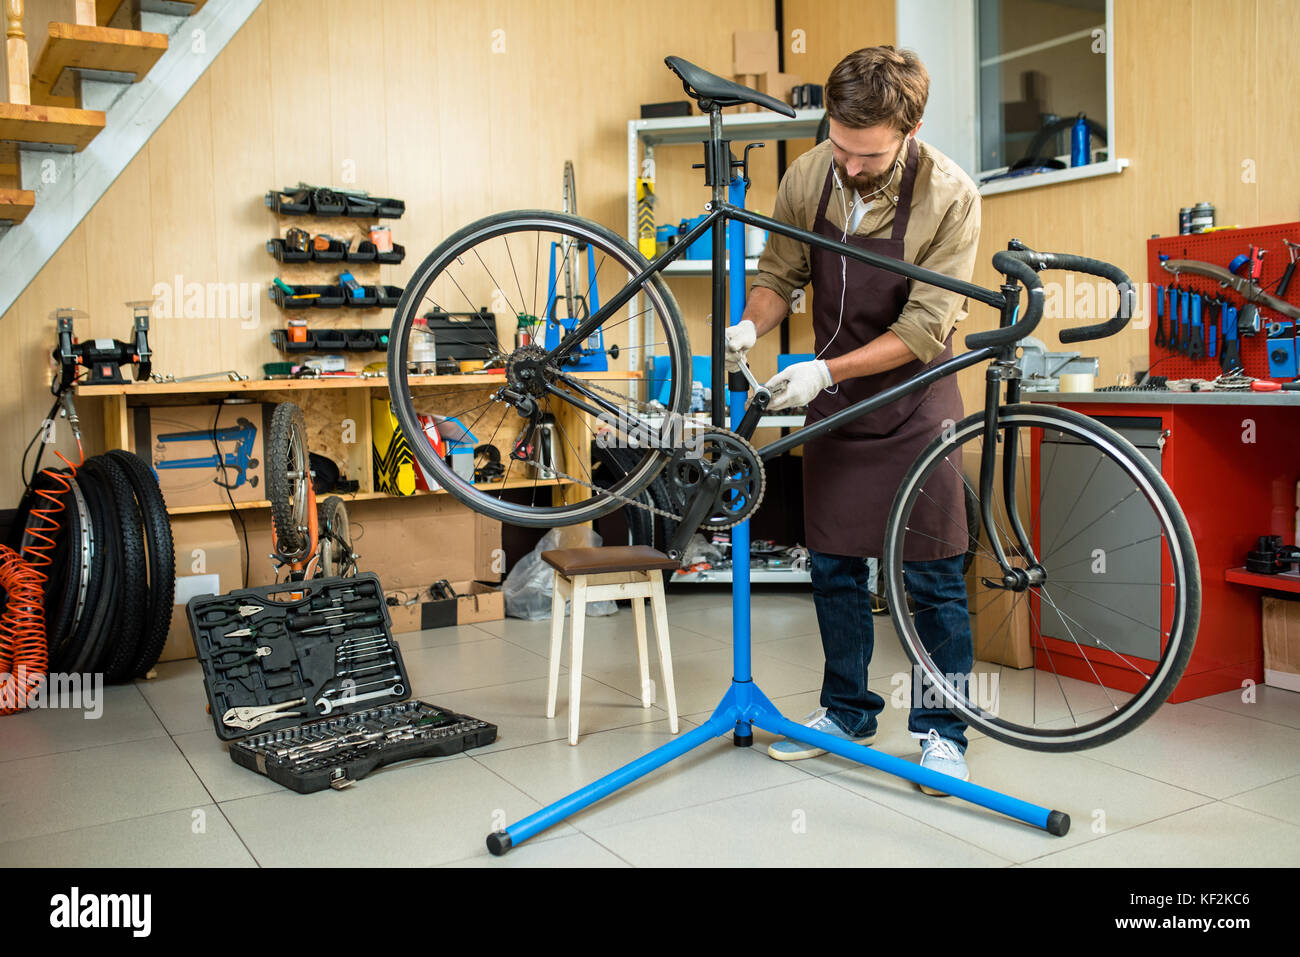 Repairing Bicycle at Workshop Stock Photo